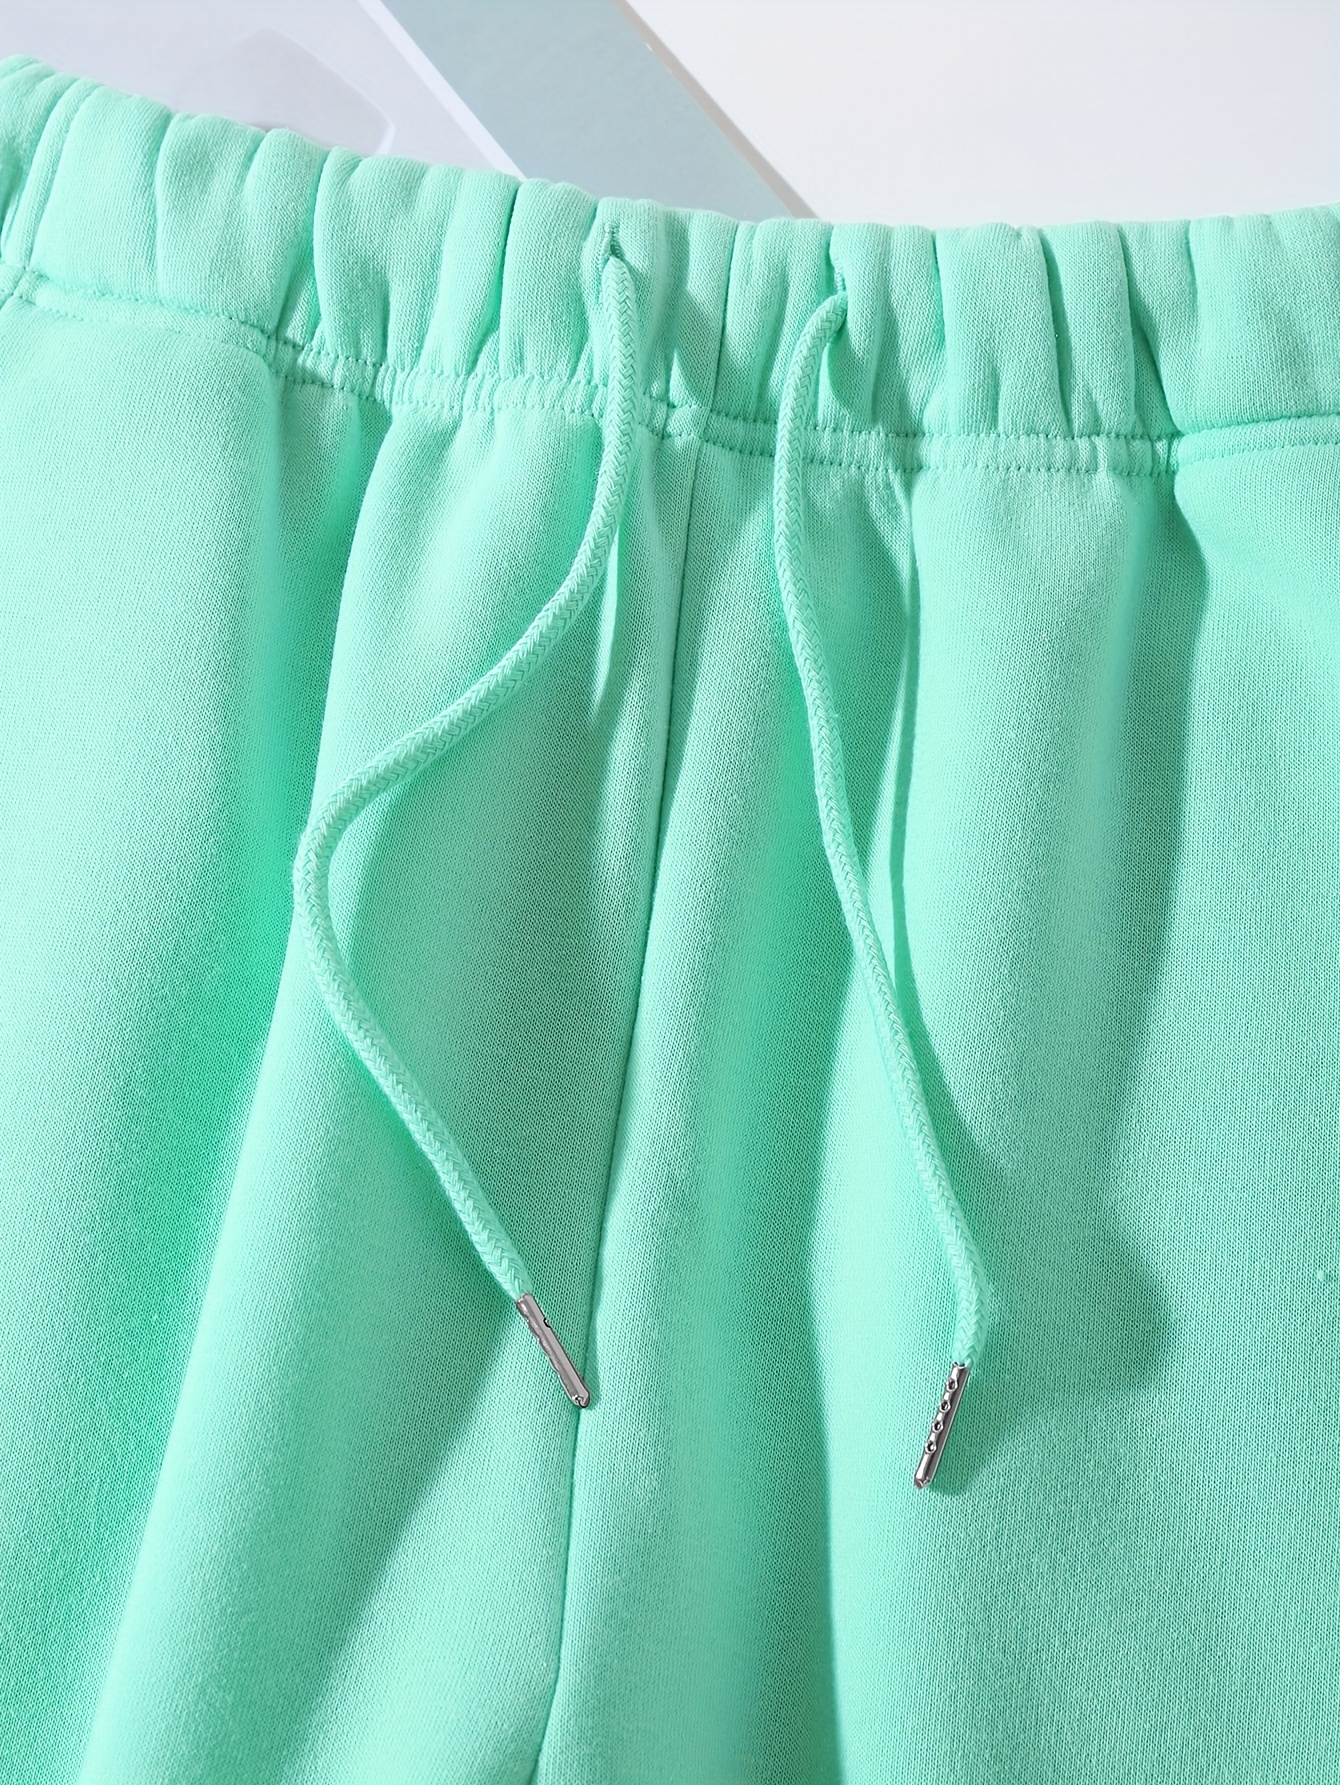 Roots Sweatpants Women's Size Small Heathered Mint Green Drawstring Joggers